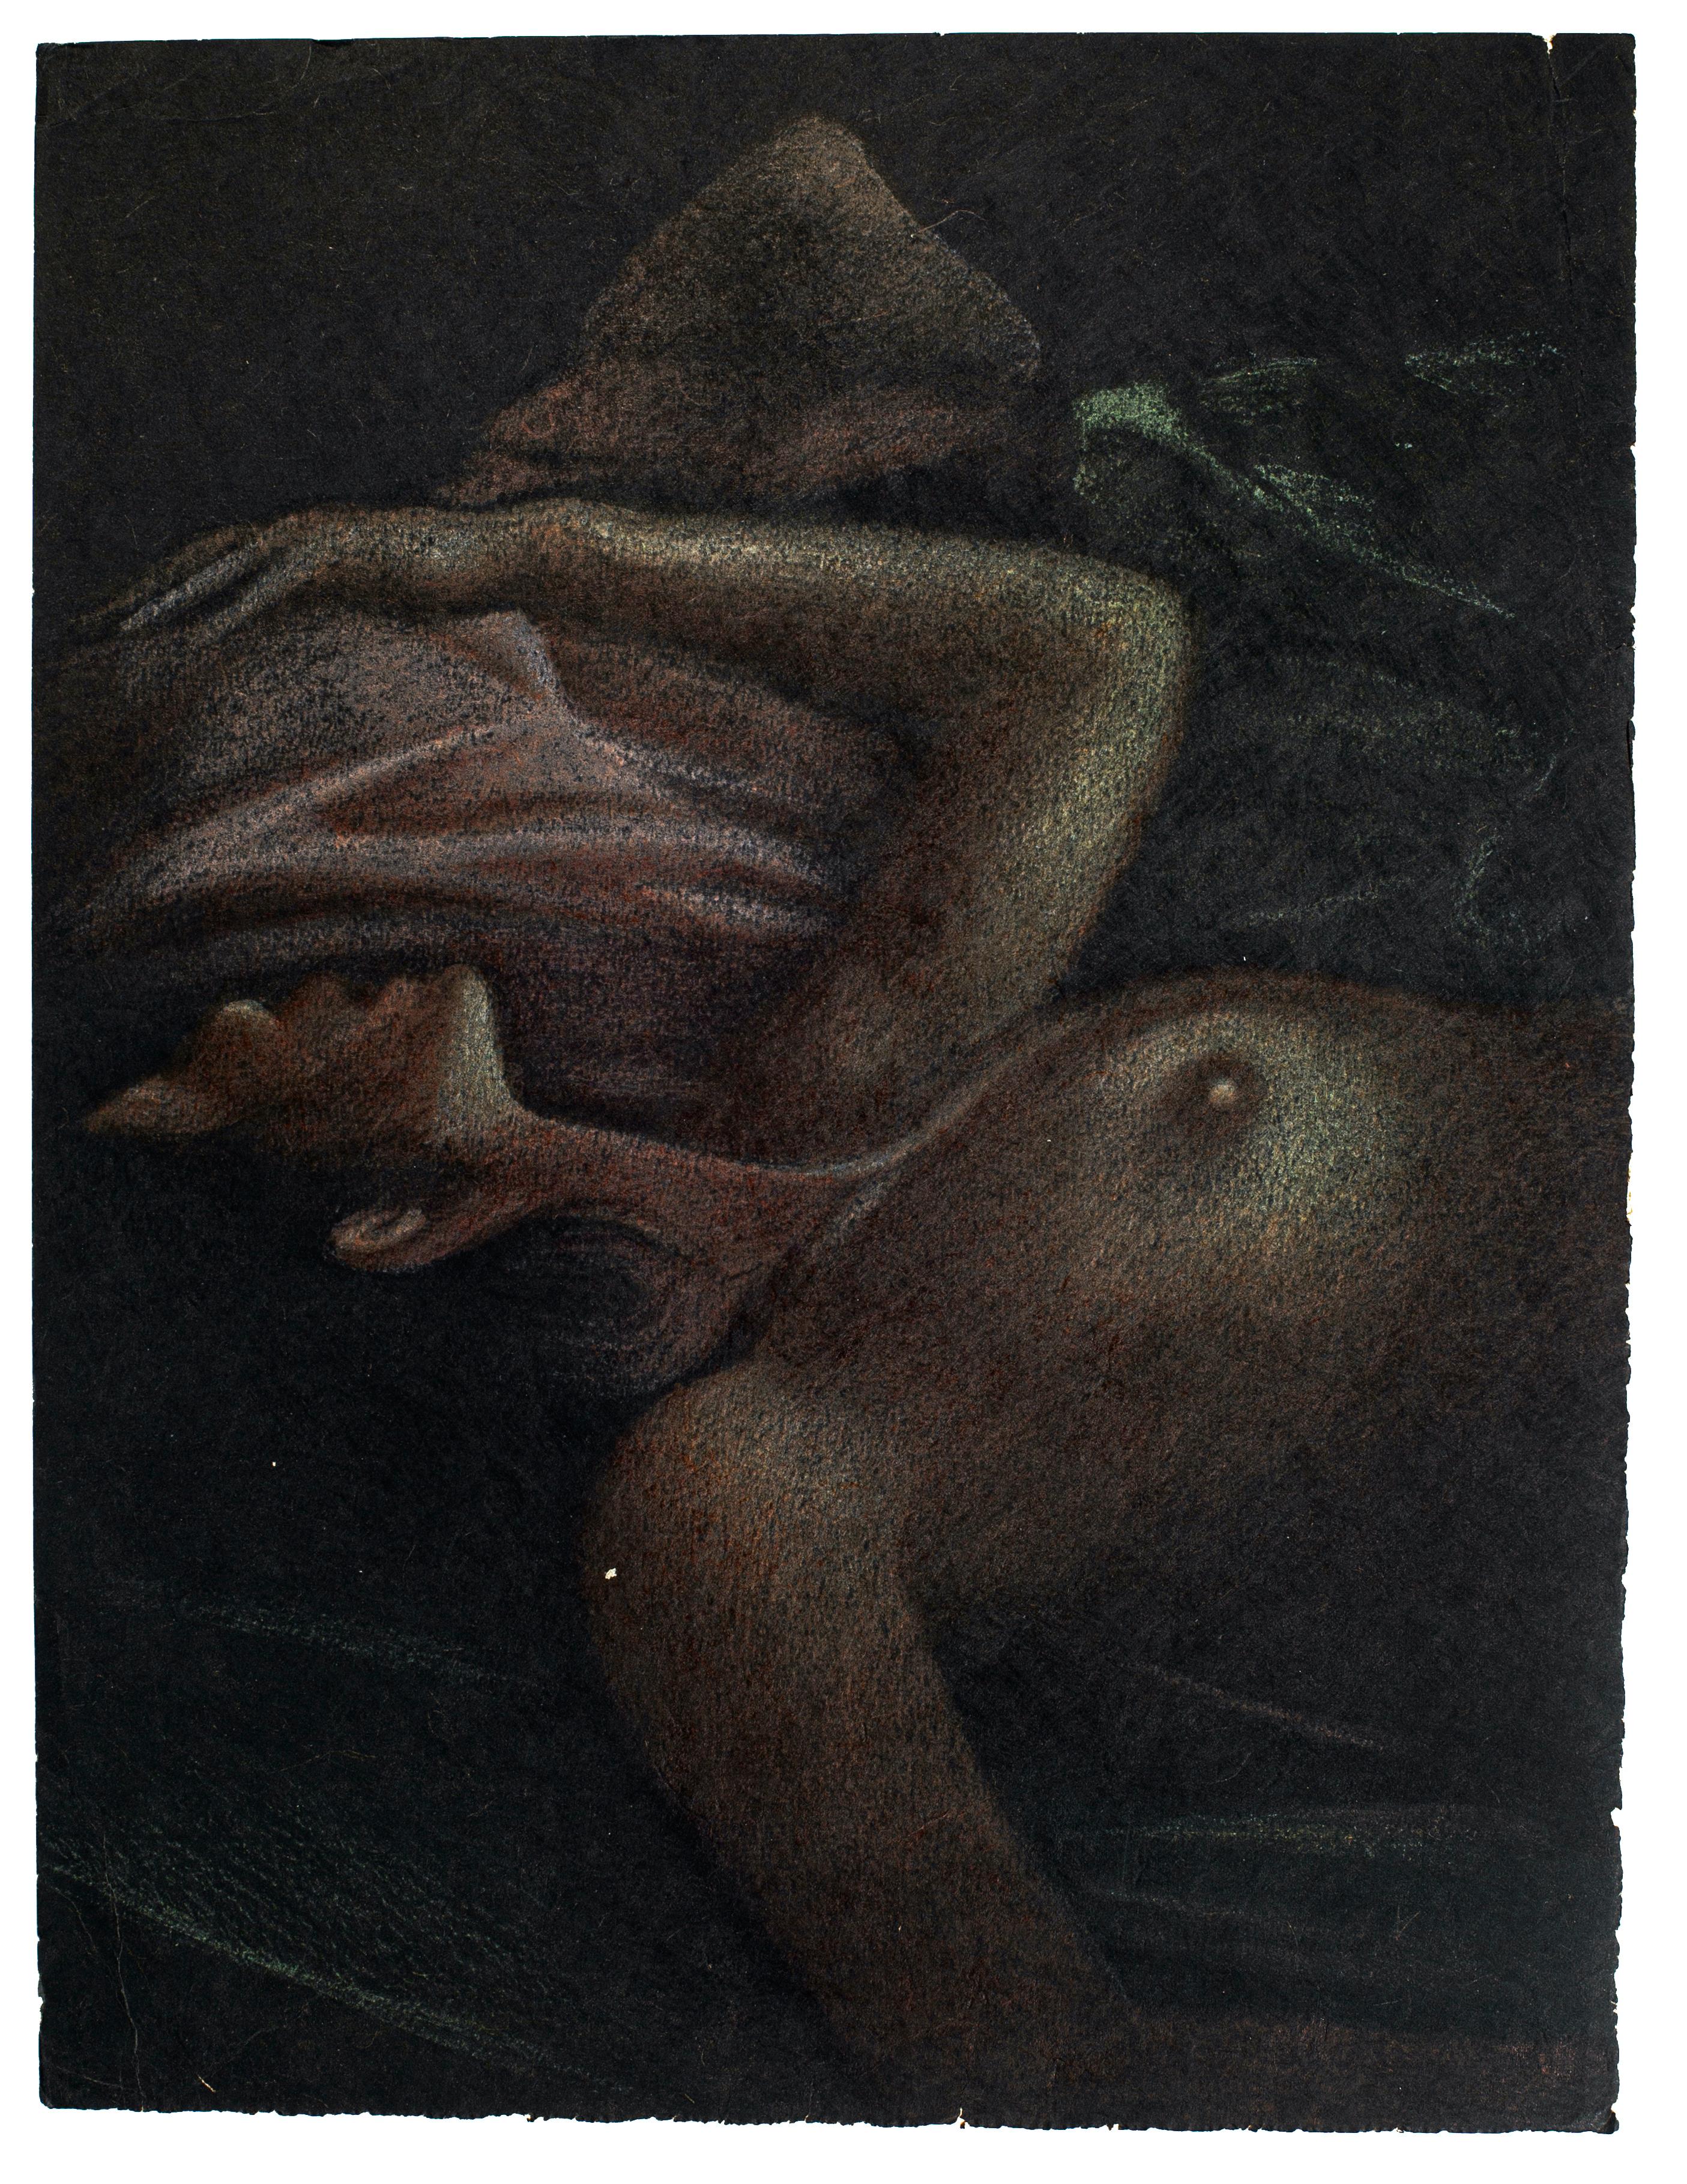 Femme Nue Allongée - Original Lithograph by B. Kelly - 1980s